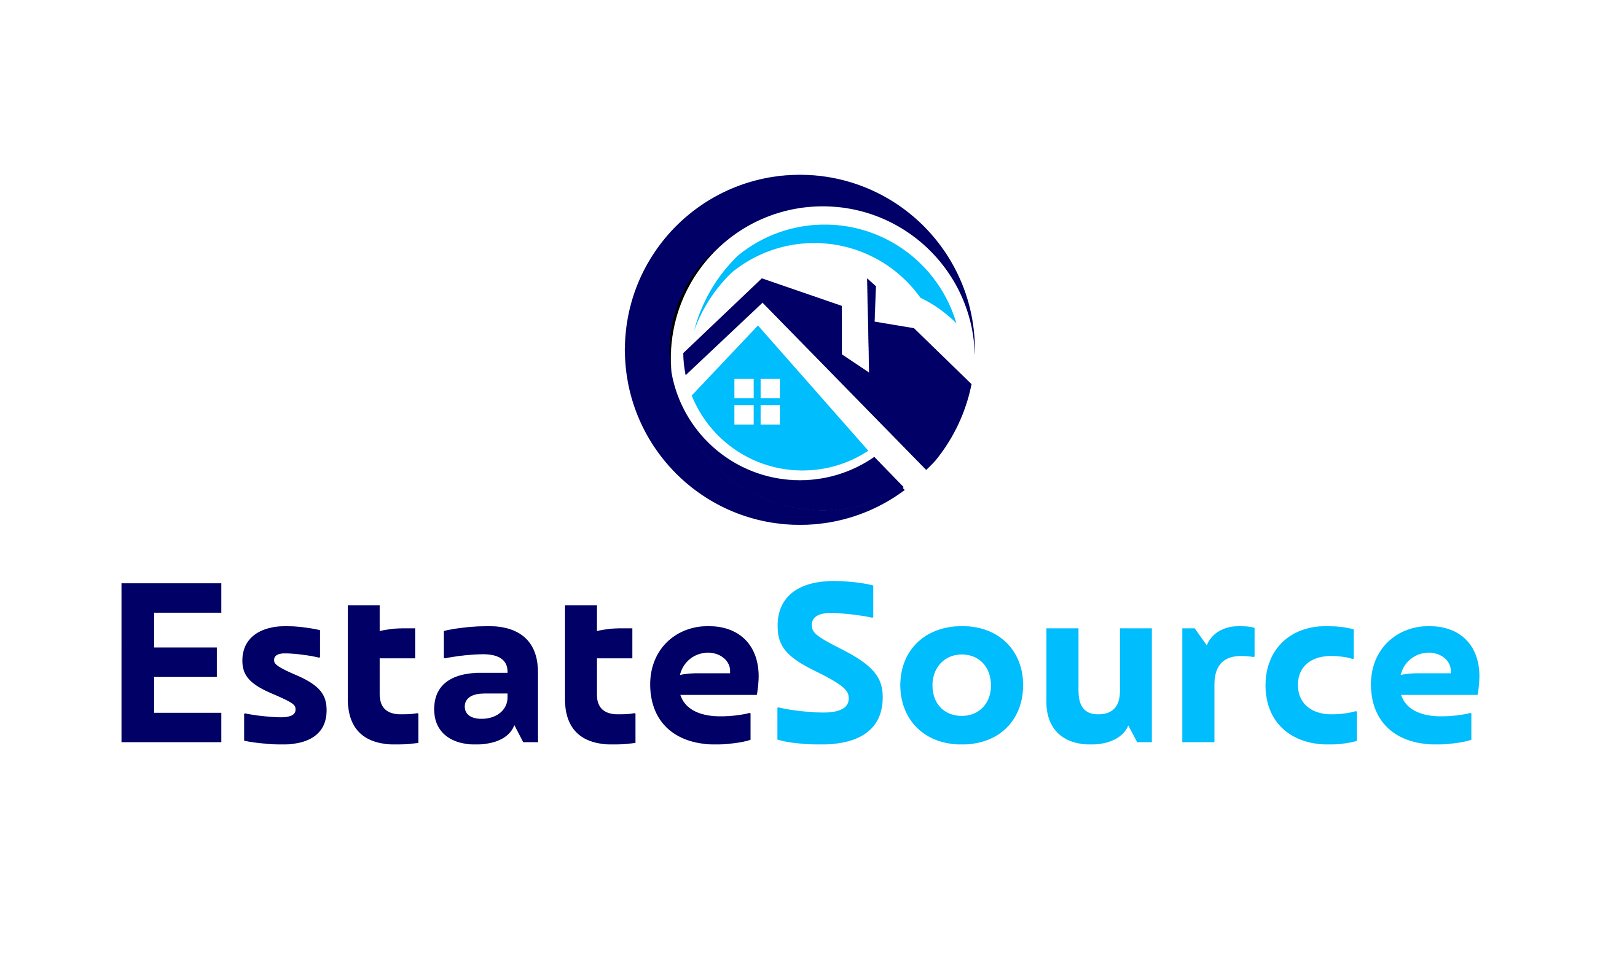 EstateSource.com - Creative brandable domain for sale